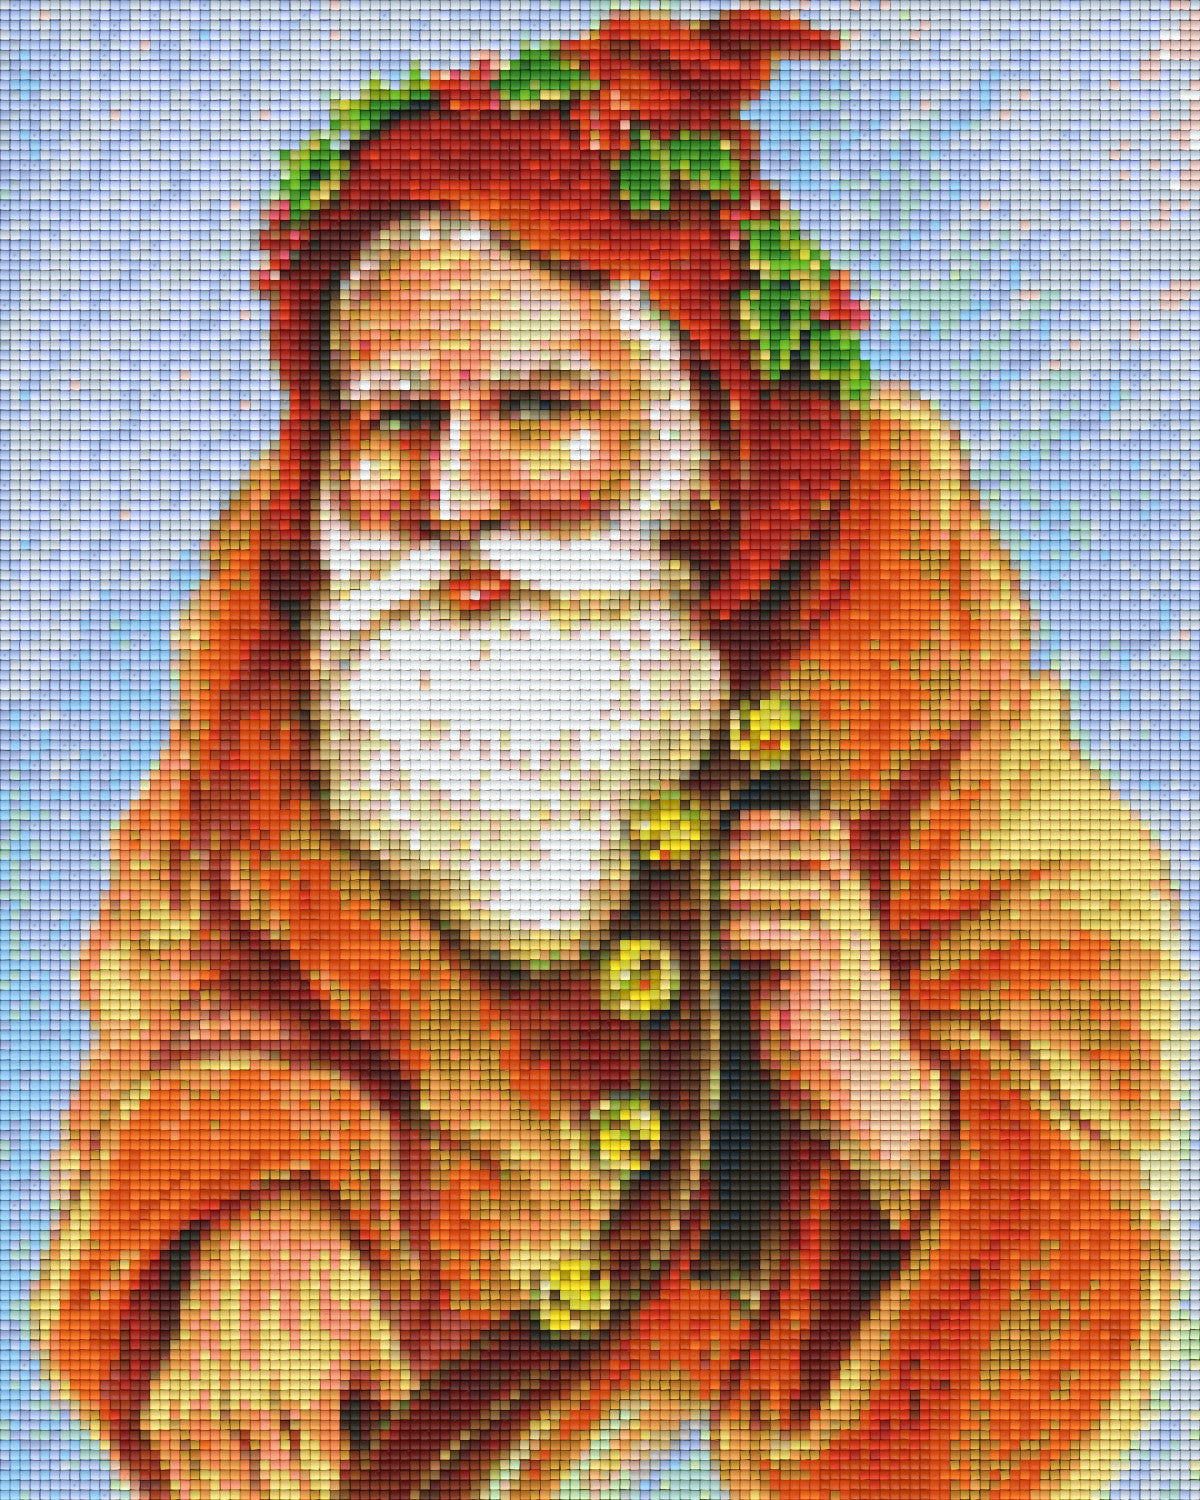 Pixelhobby classic set - Santa Claus is coming